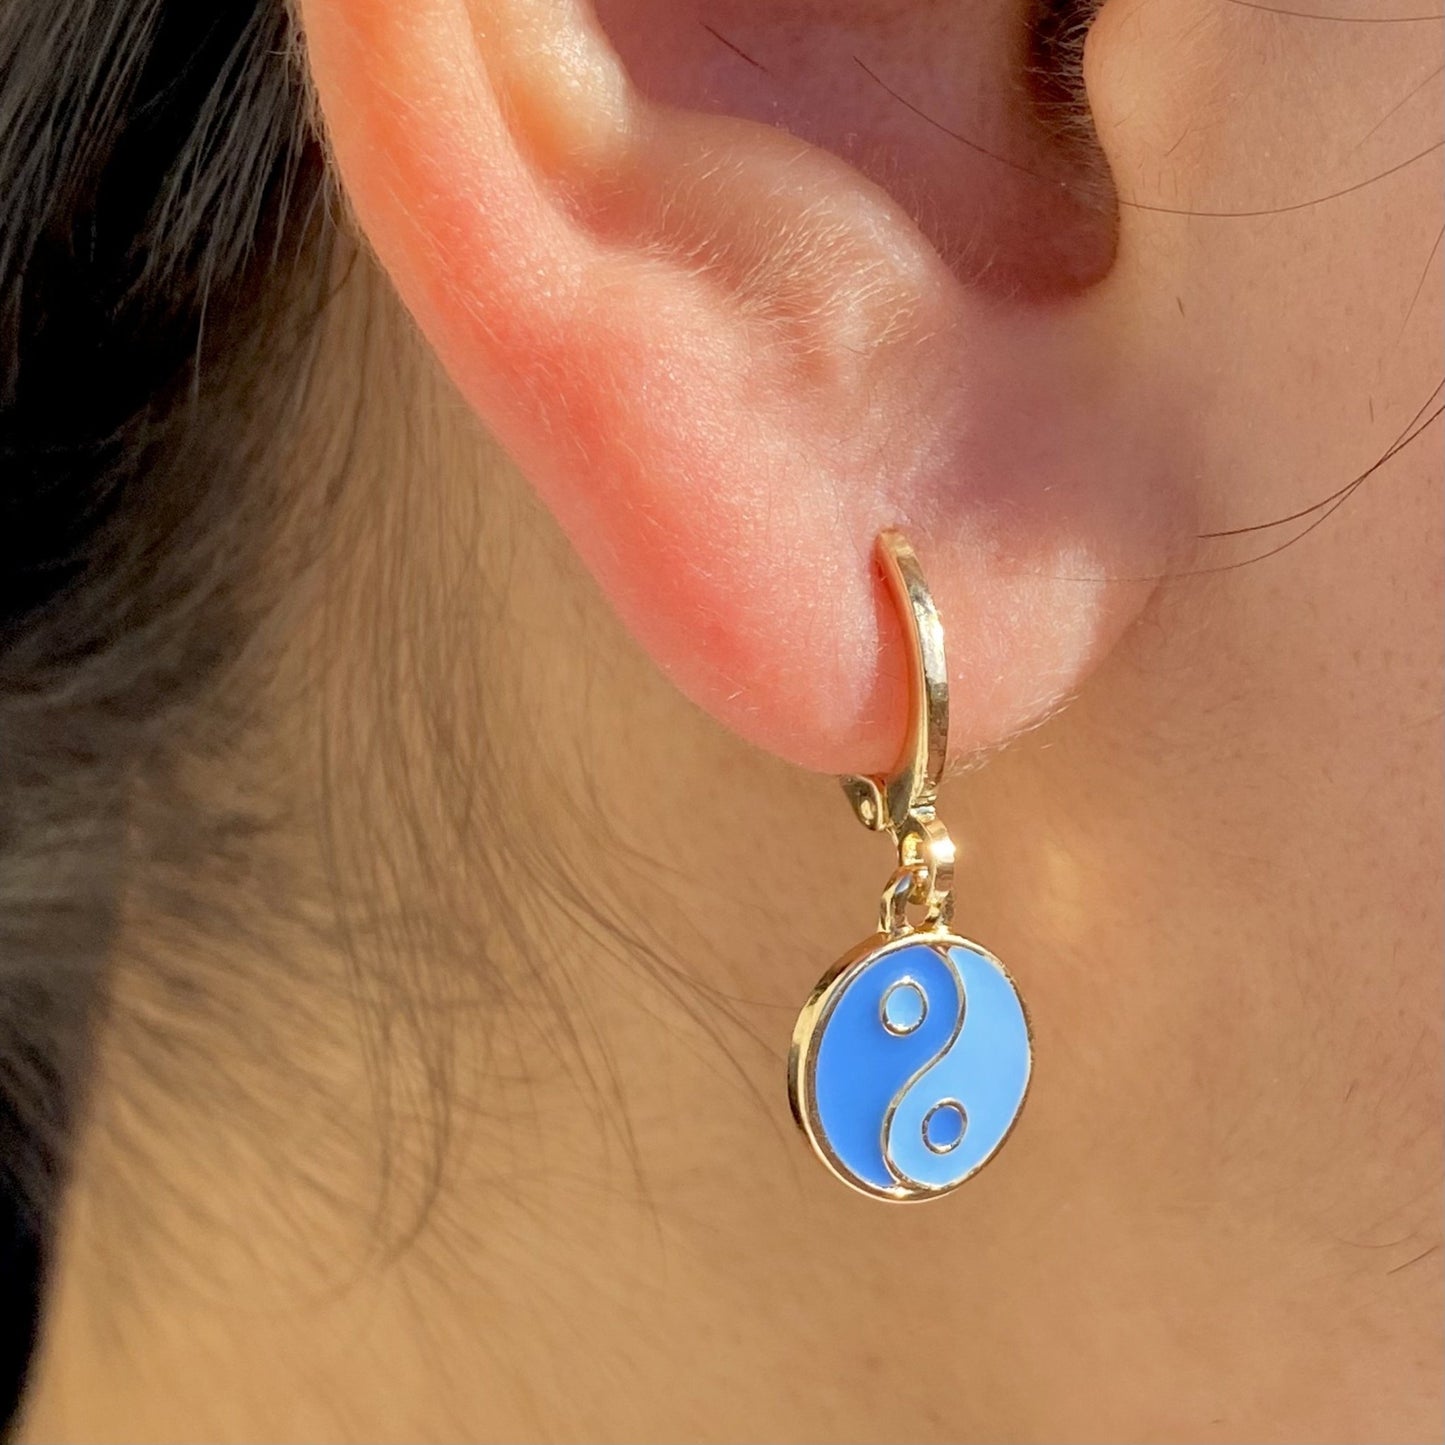 Blue Balance Earrings - blunt cases